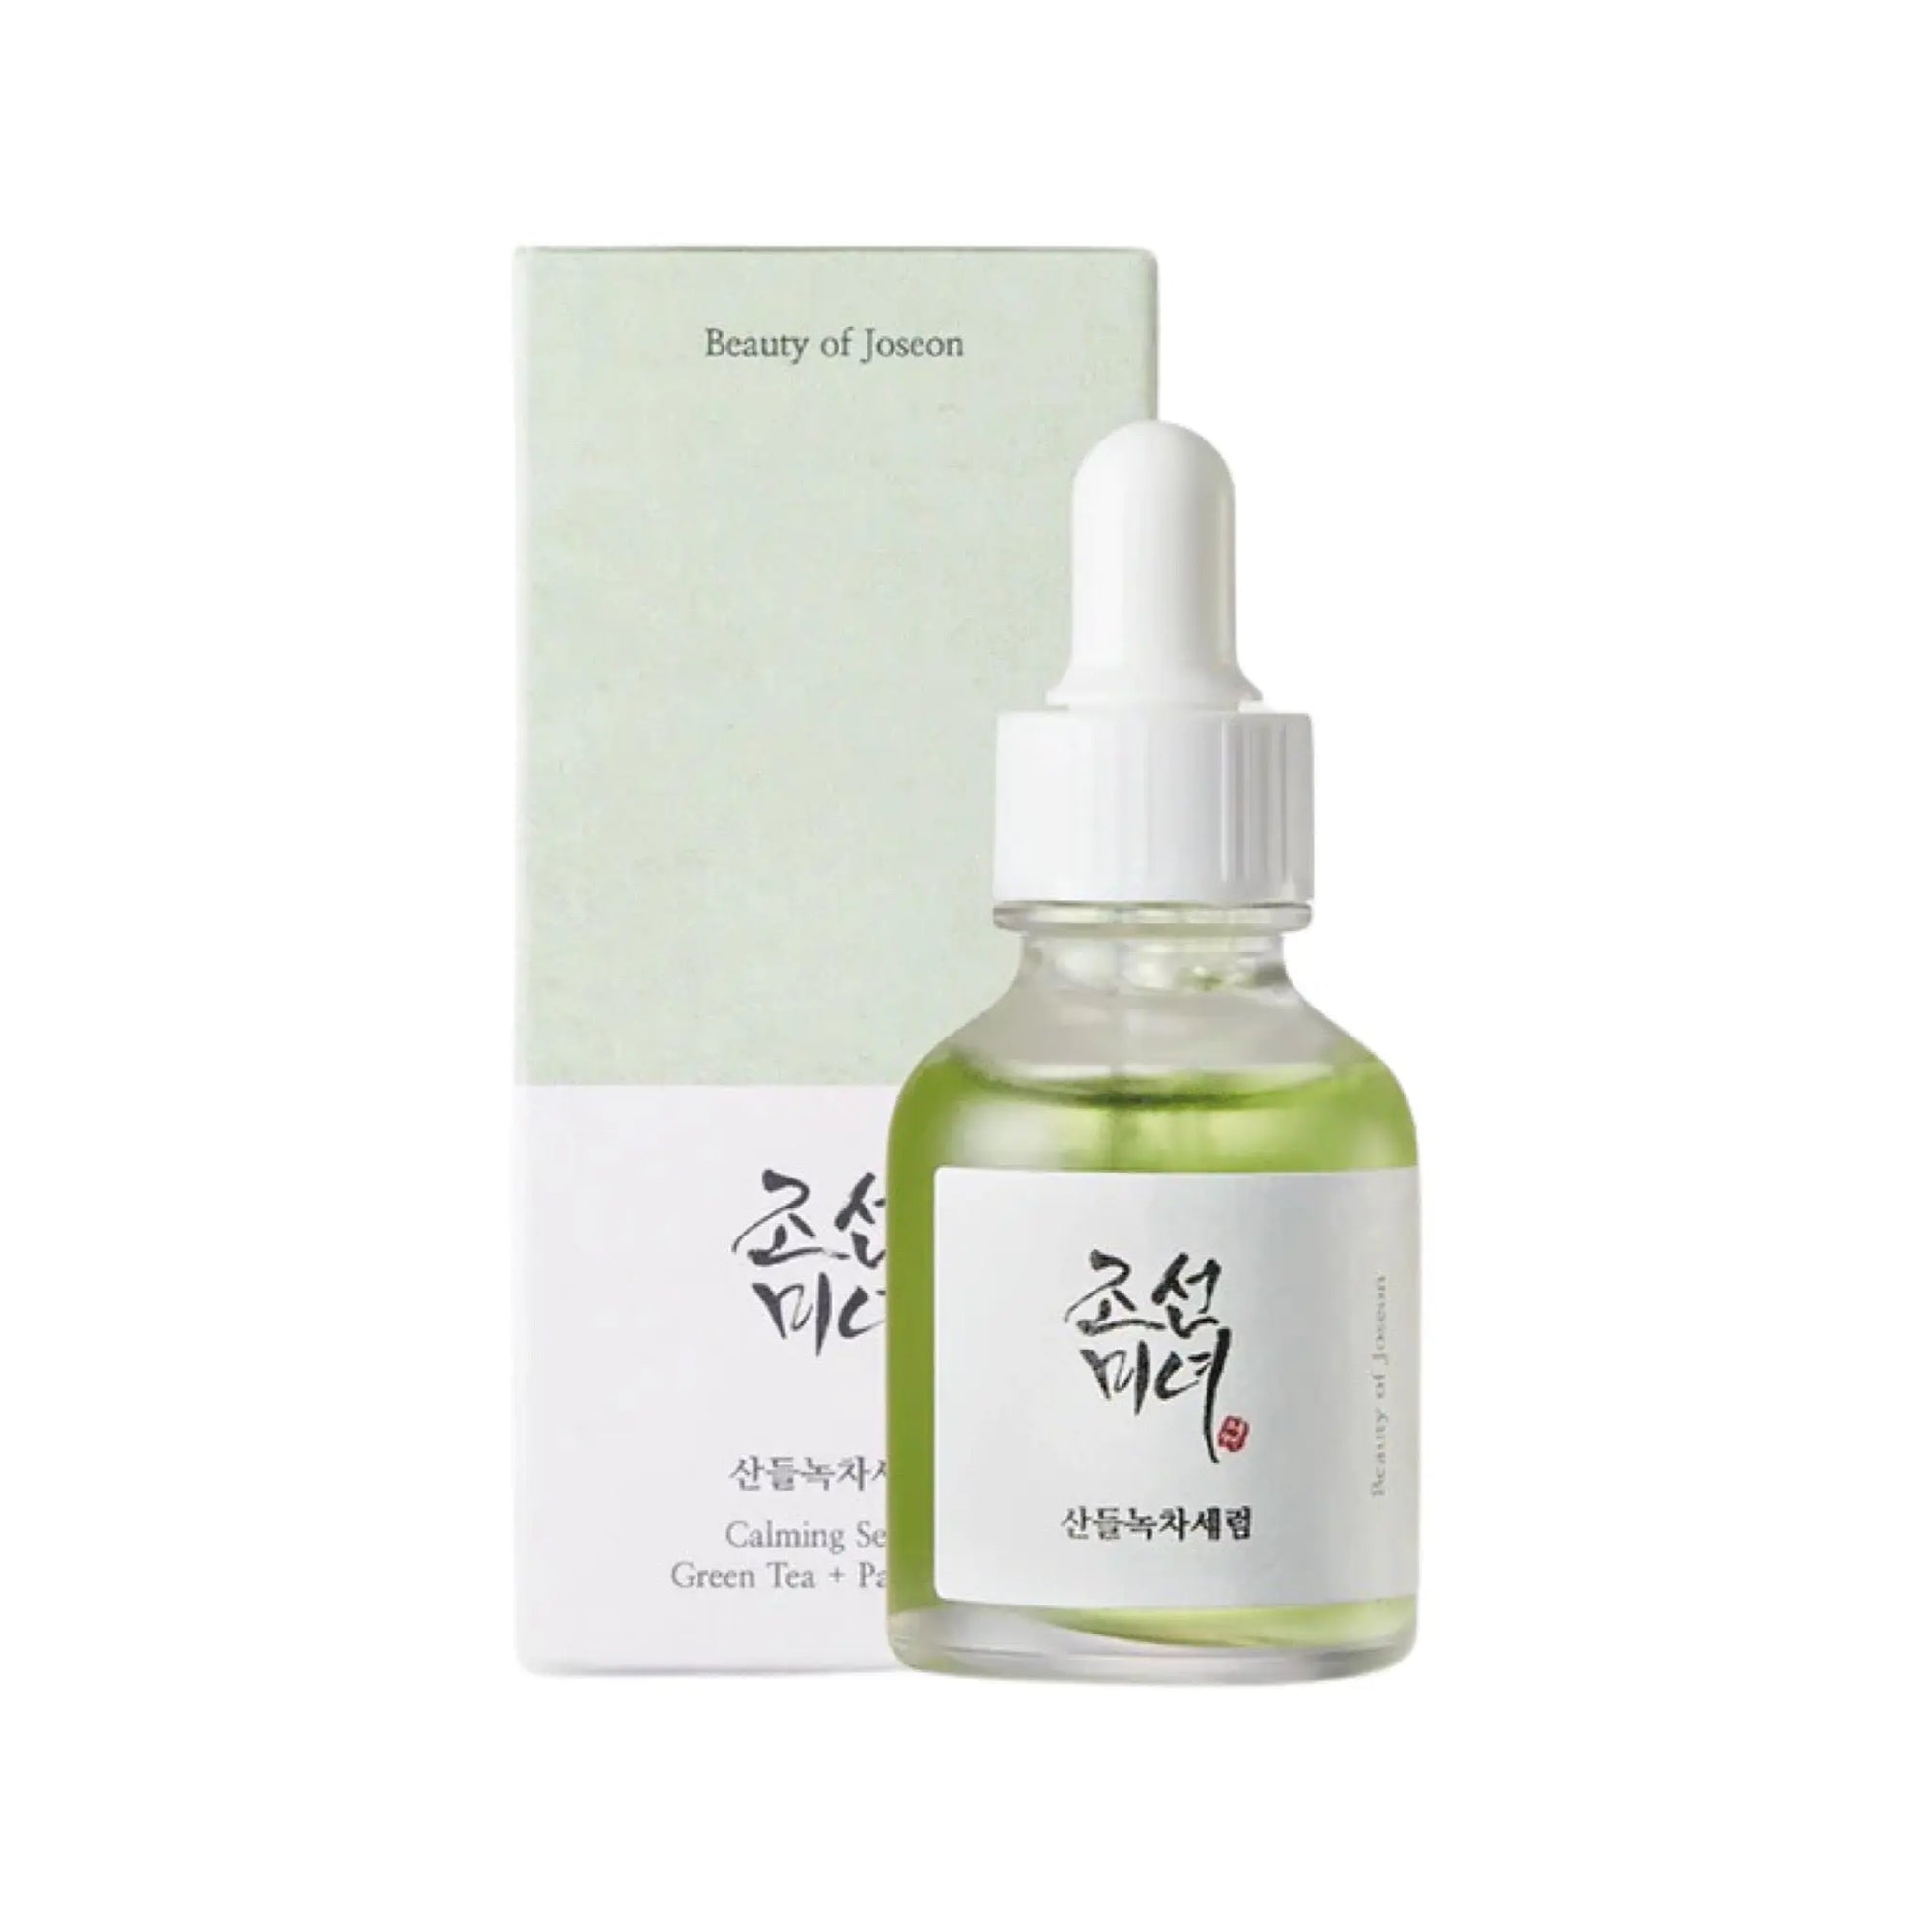 Beauty of Joseon - Calming Serum: Green Tea+Panthenol 30mL Beauty of Joseon